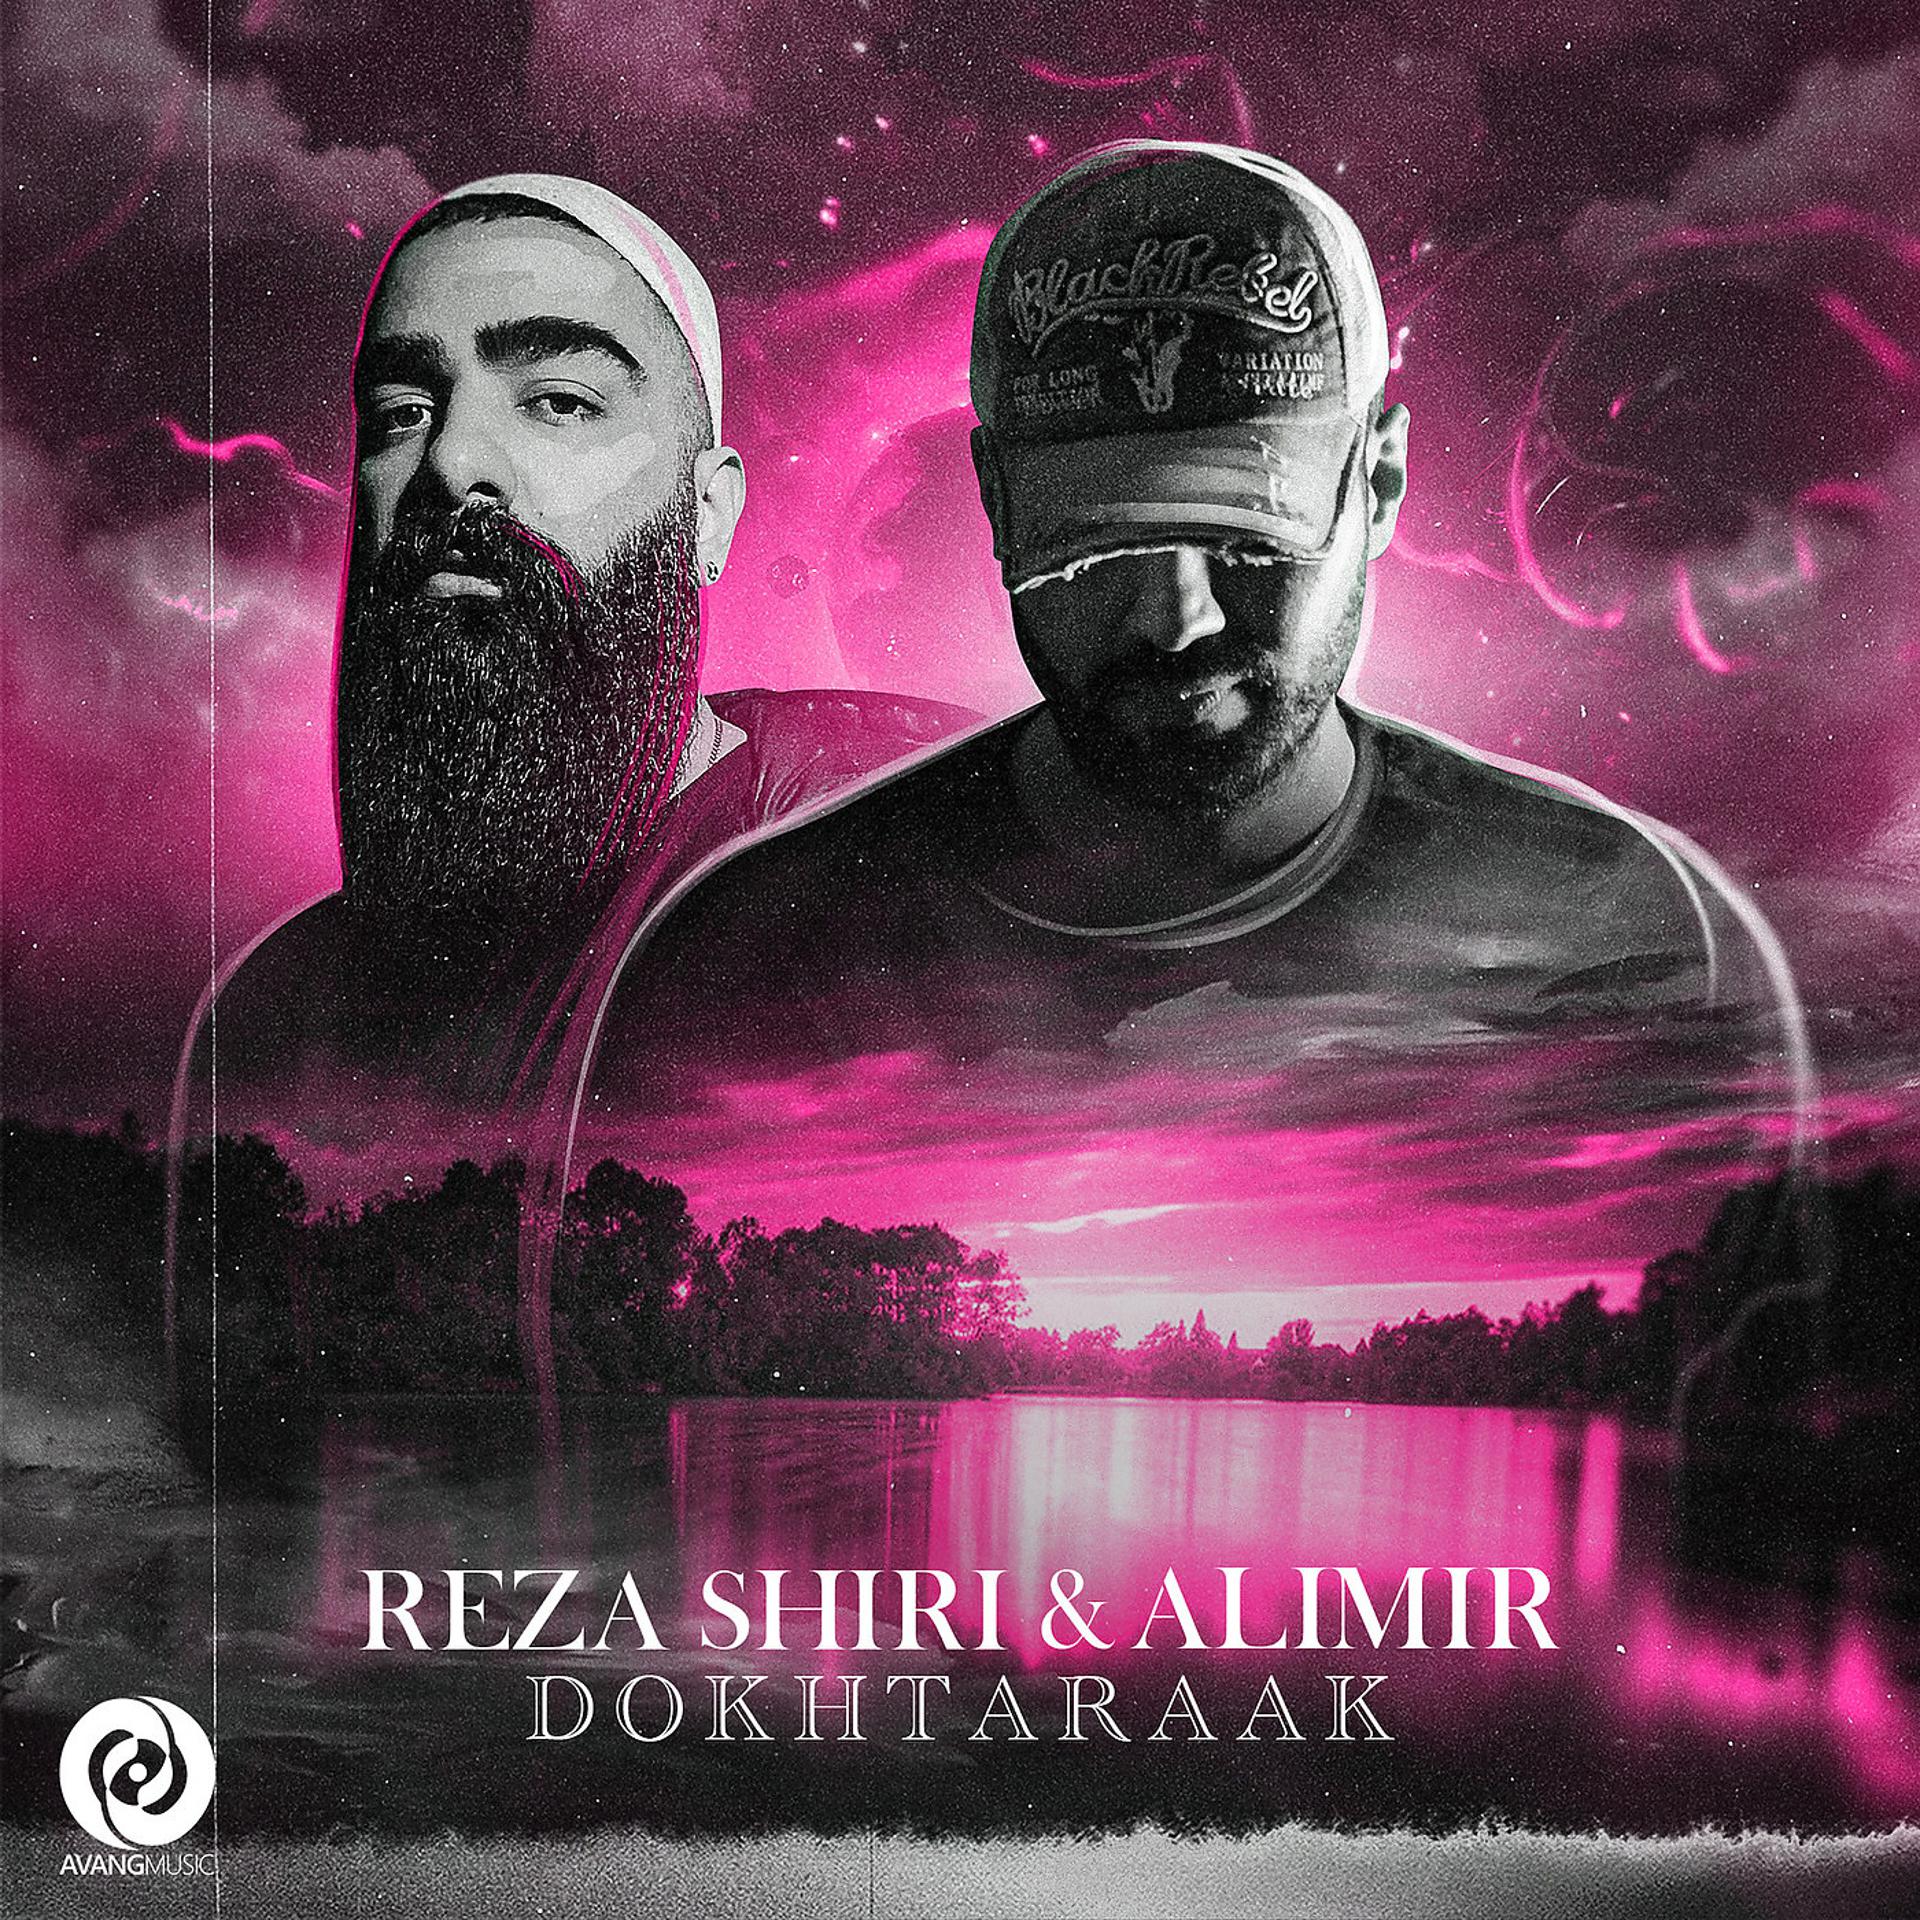 Постер к треку Reza Shiri - Dokhtaraak